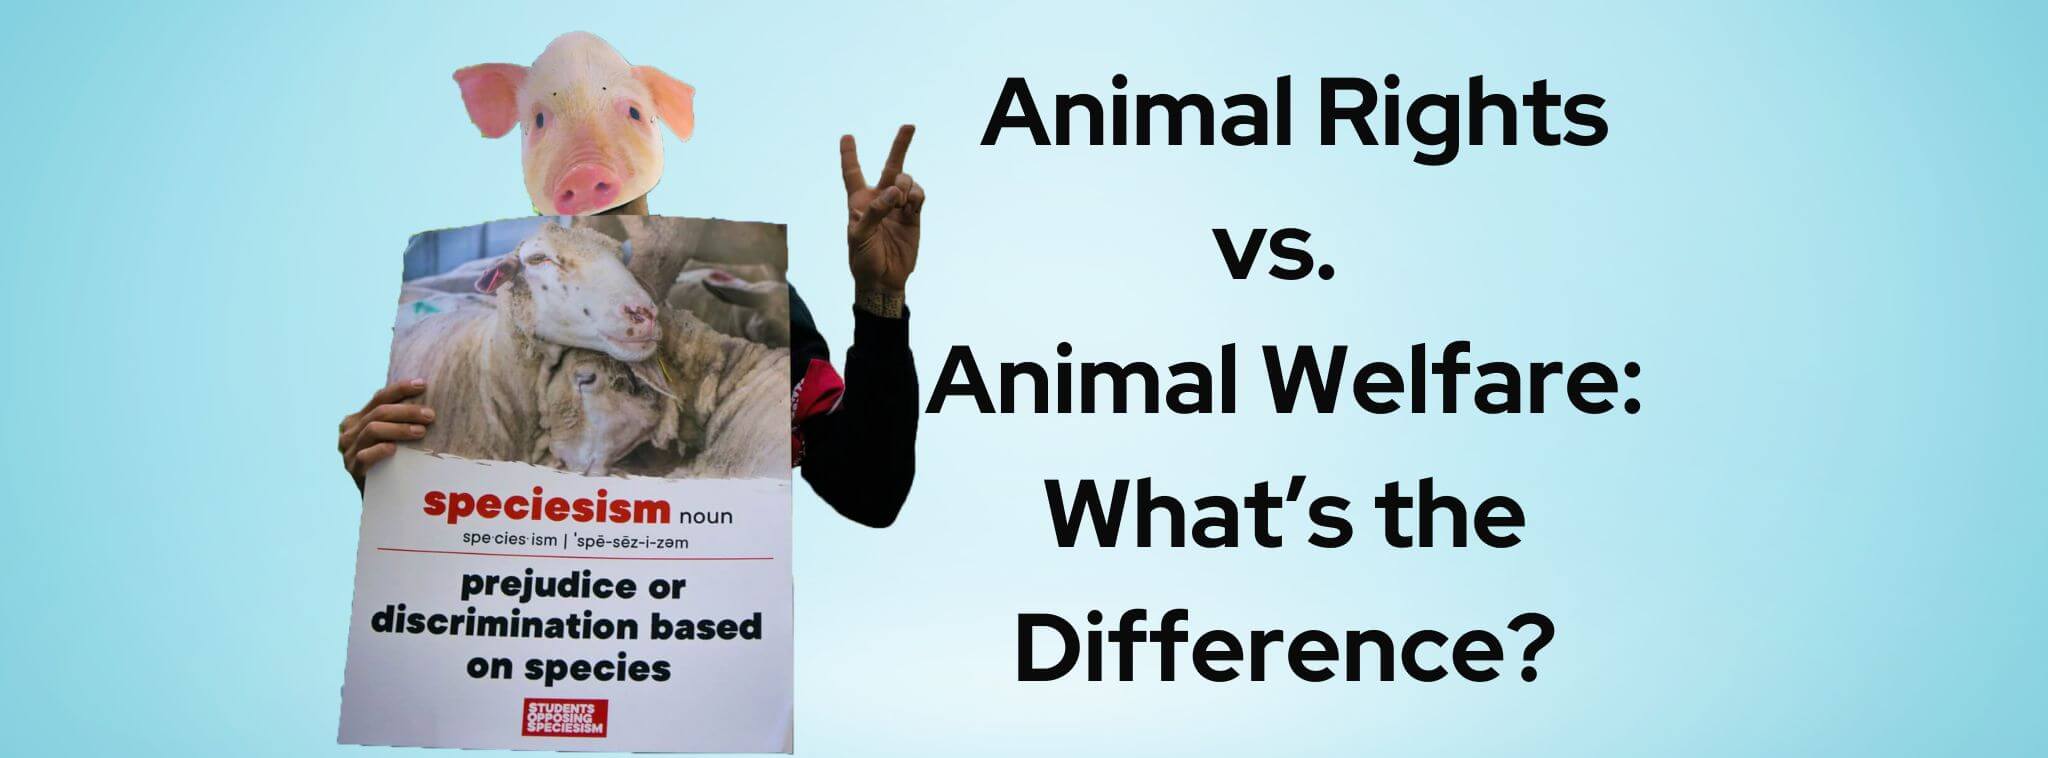 animal rights vs animal welfare essay